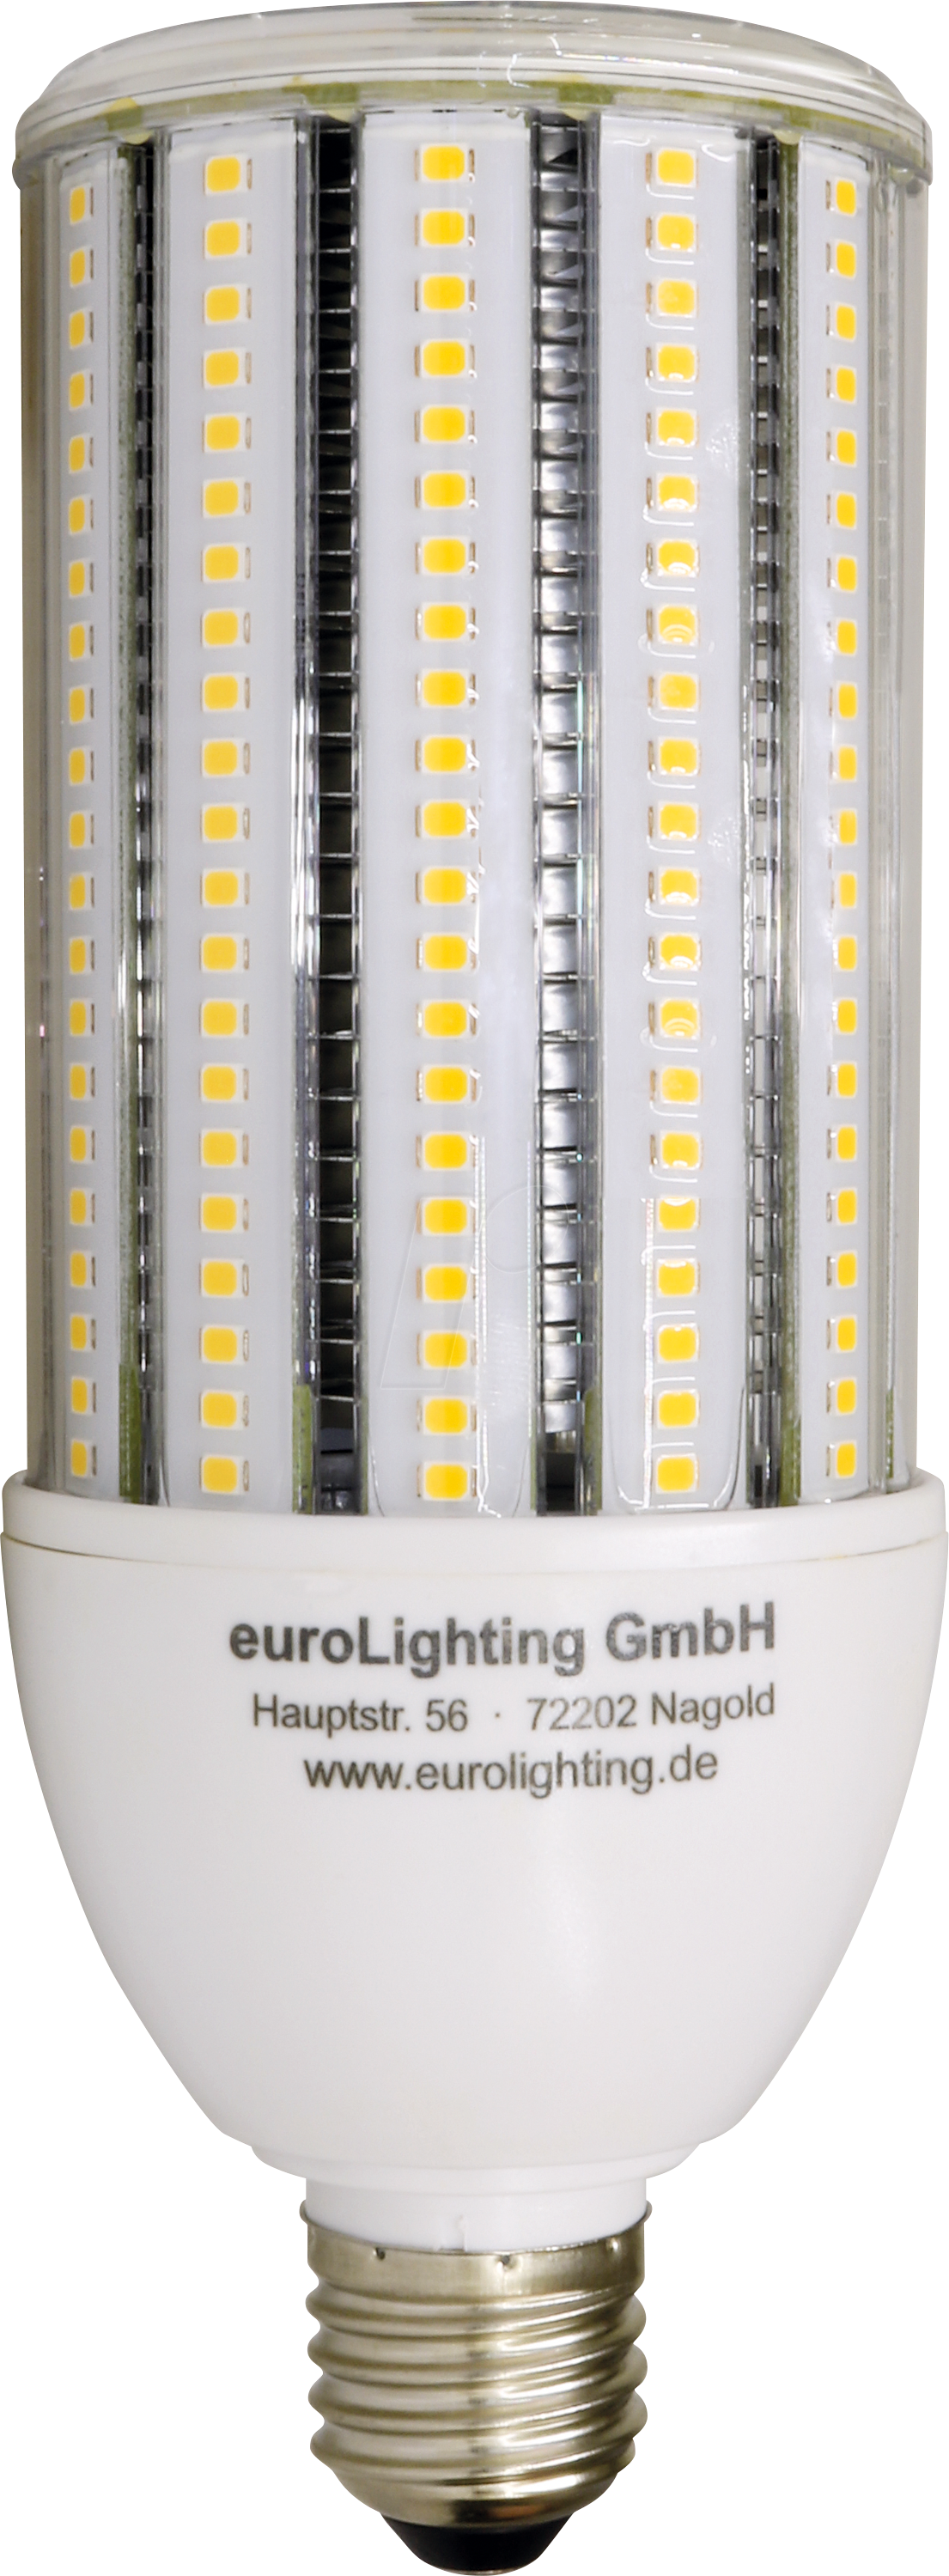 EURL 69DAC00003 - LED-Lampe E27, Cornbulb, 20 W, 2640 lm, 4000 K, dimmbar, ESSB von EUROLIGHTING